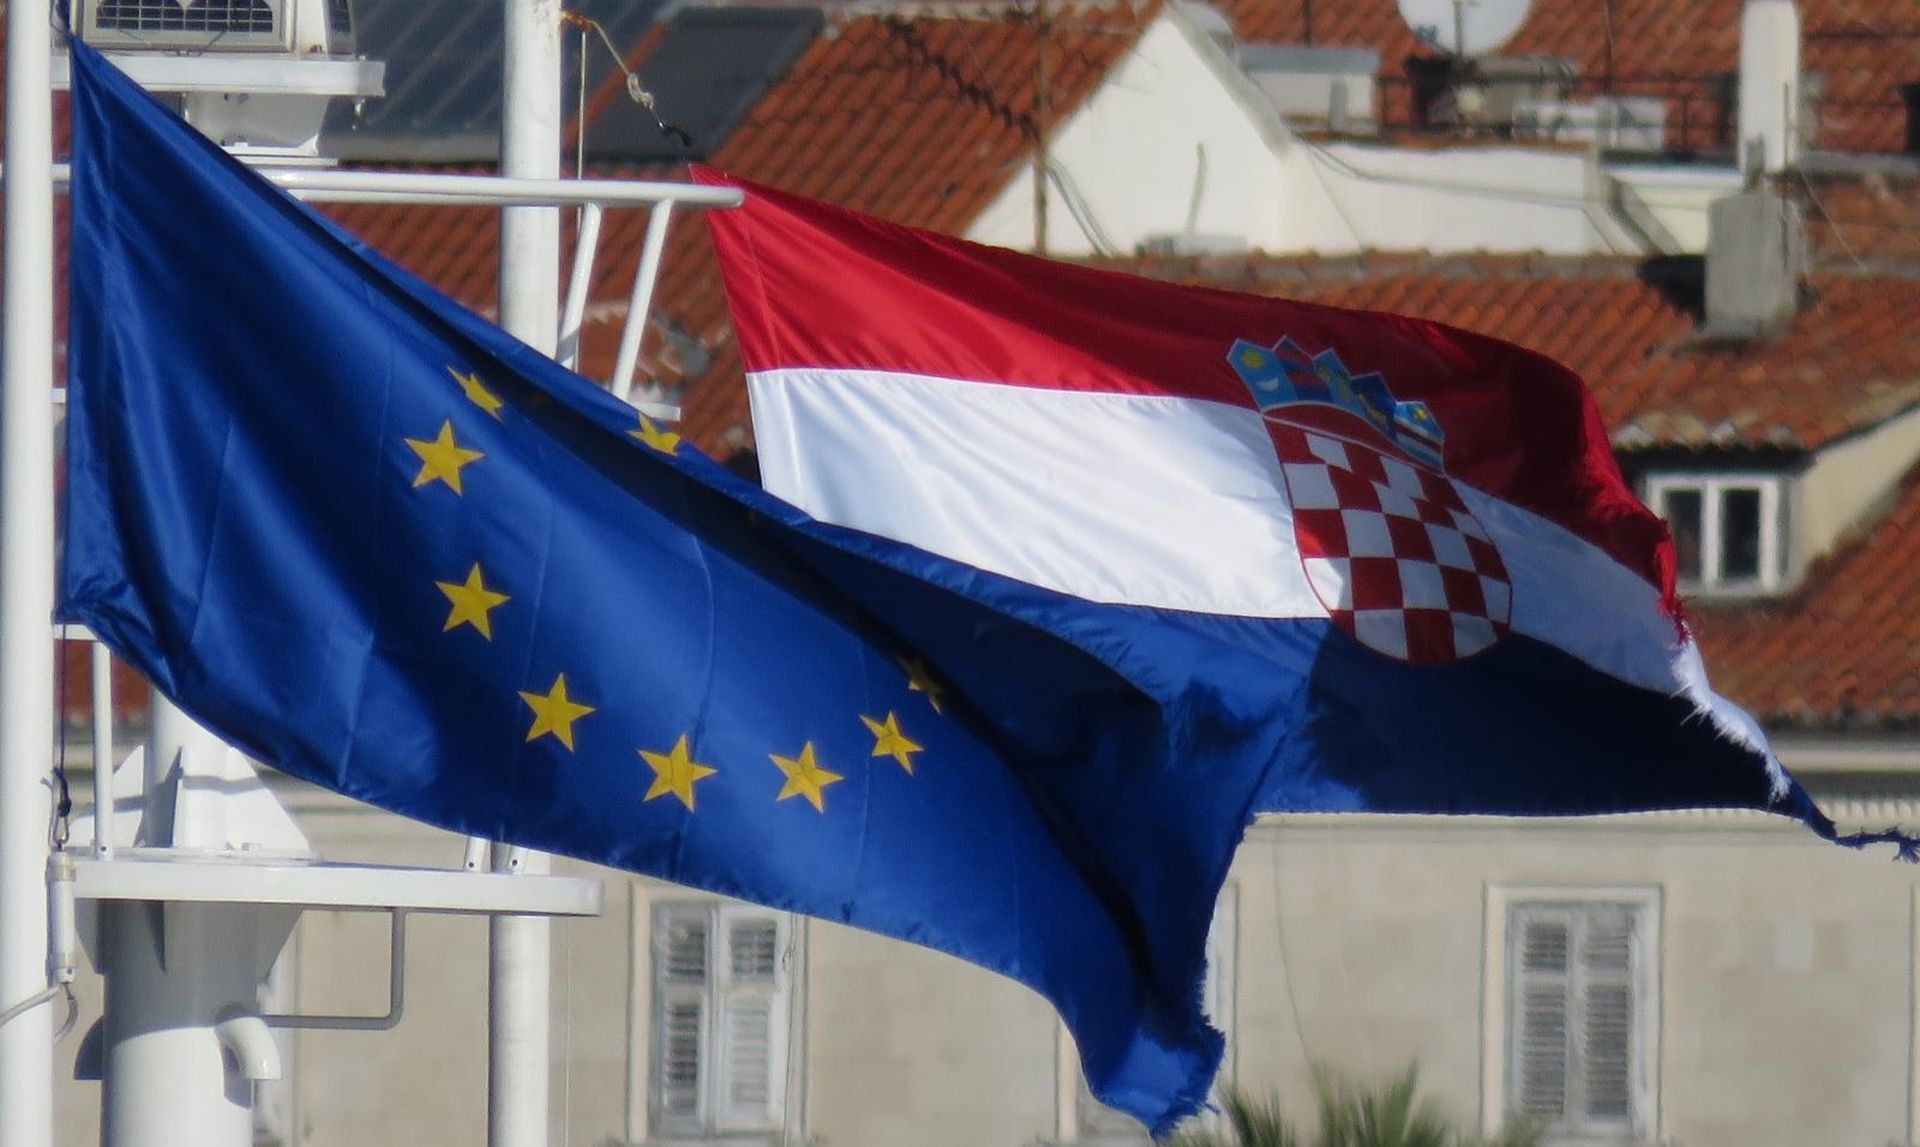 12.01.2015., Split - Europska i hrvatska zastava na carinskom gatu.
Photo: Ivo Cagalj/PIXSELL